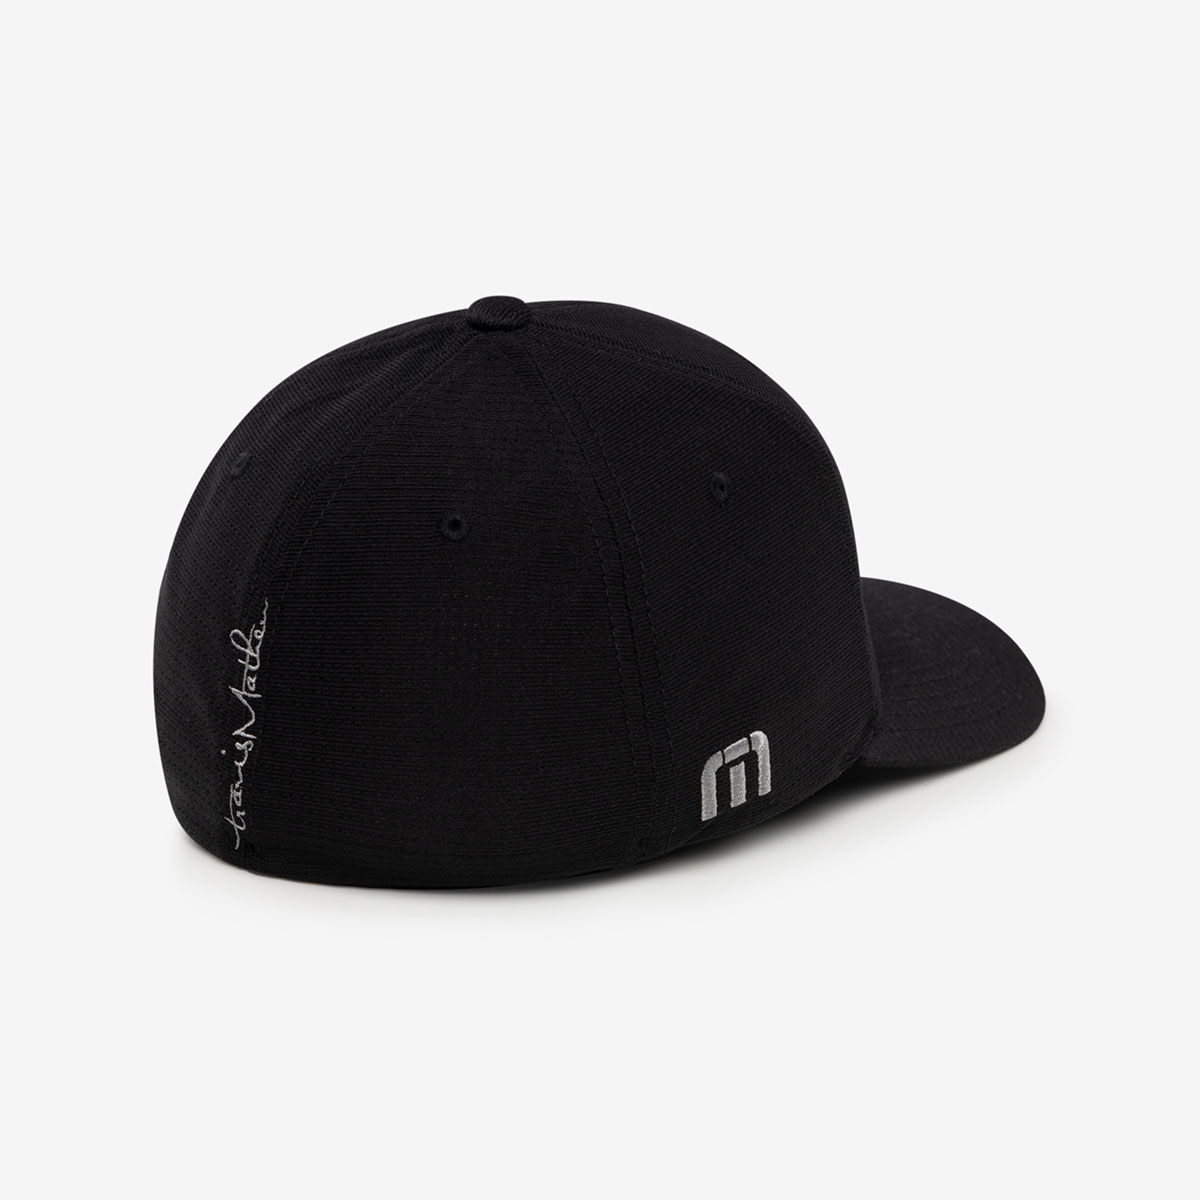 Travis Mathew x Hard Rock Nassau Hat in Black image number 2